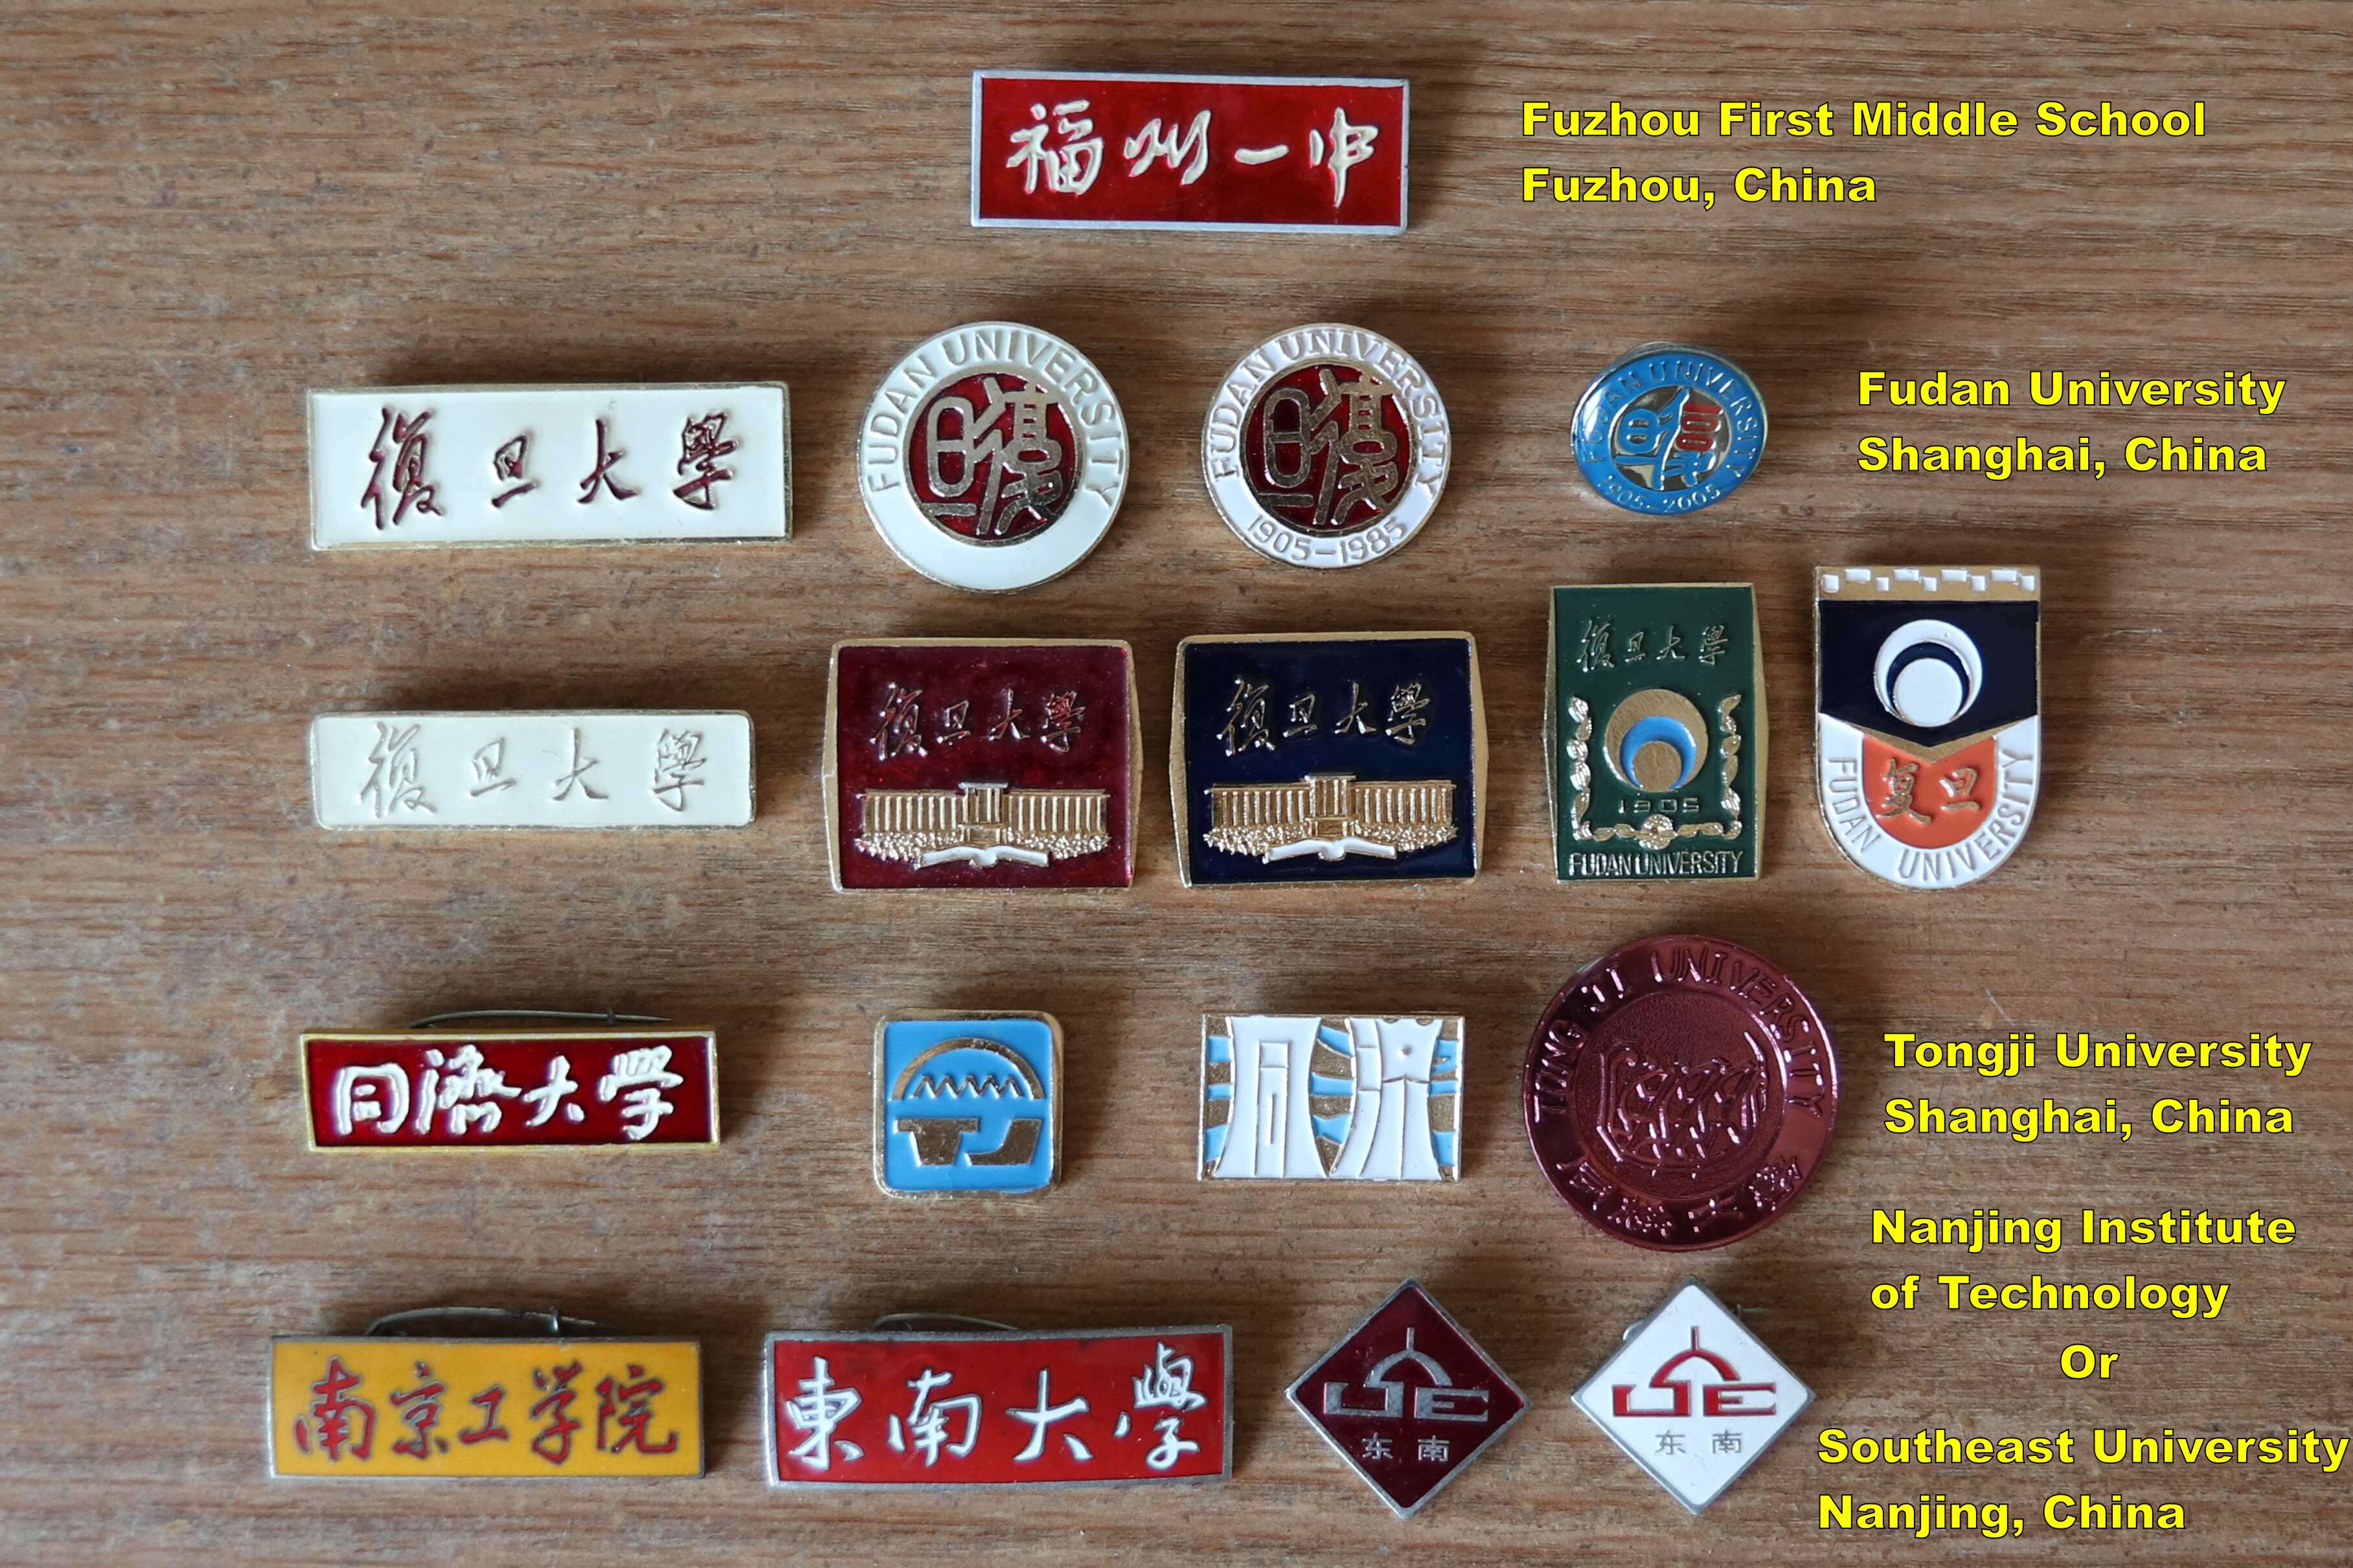  * Badges of Fuzhou First Middle School, Shanghai Fundan University, Shanghai Tongji University, and Nanjin Southeast University * 